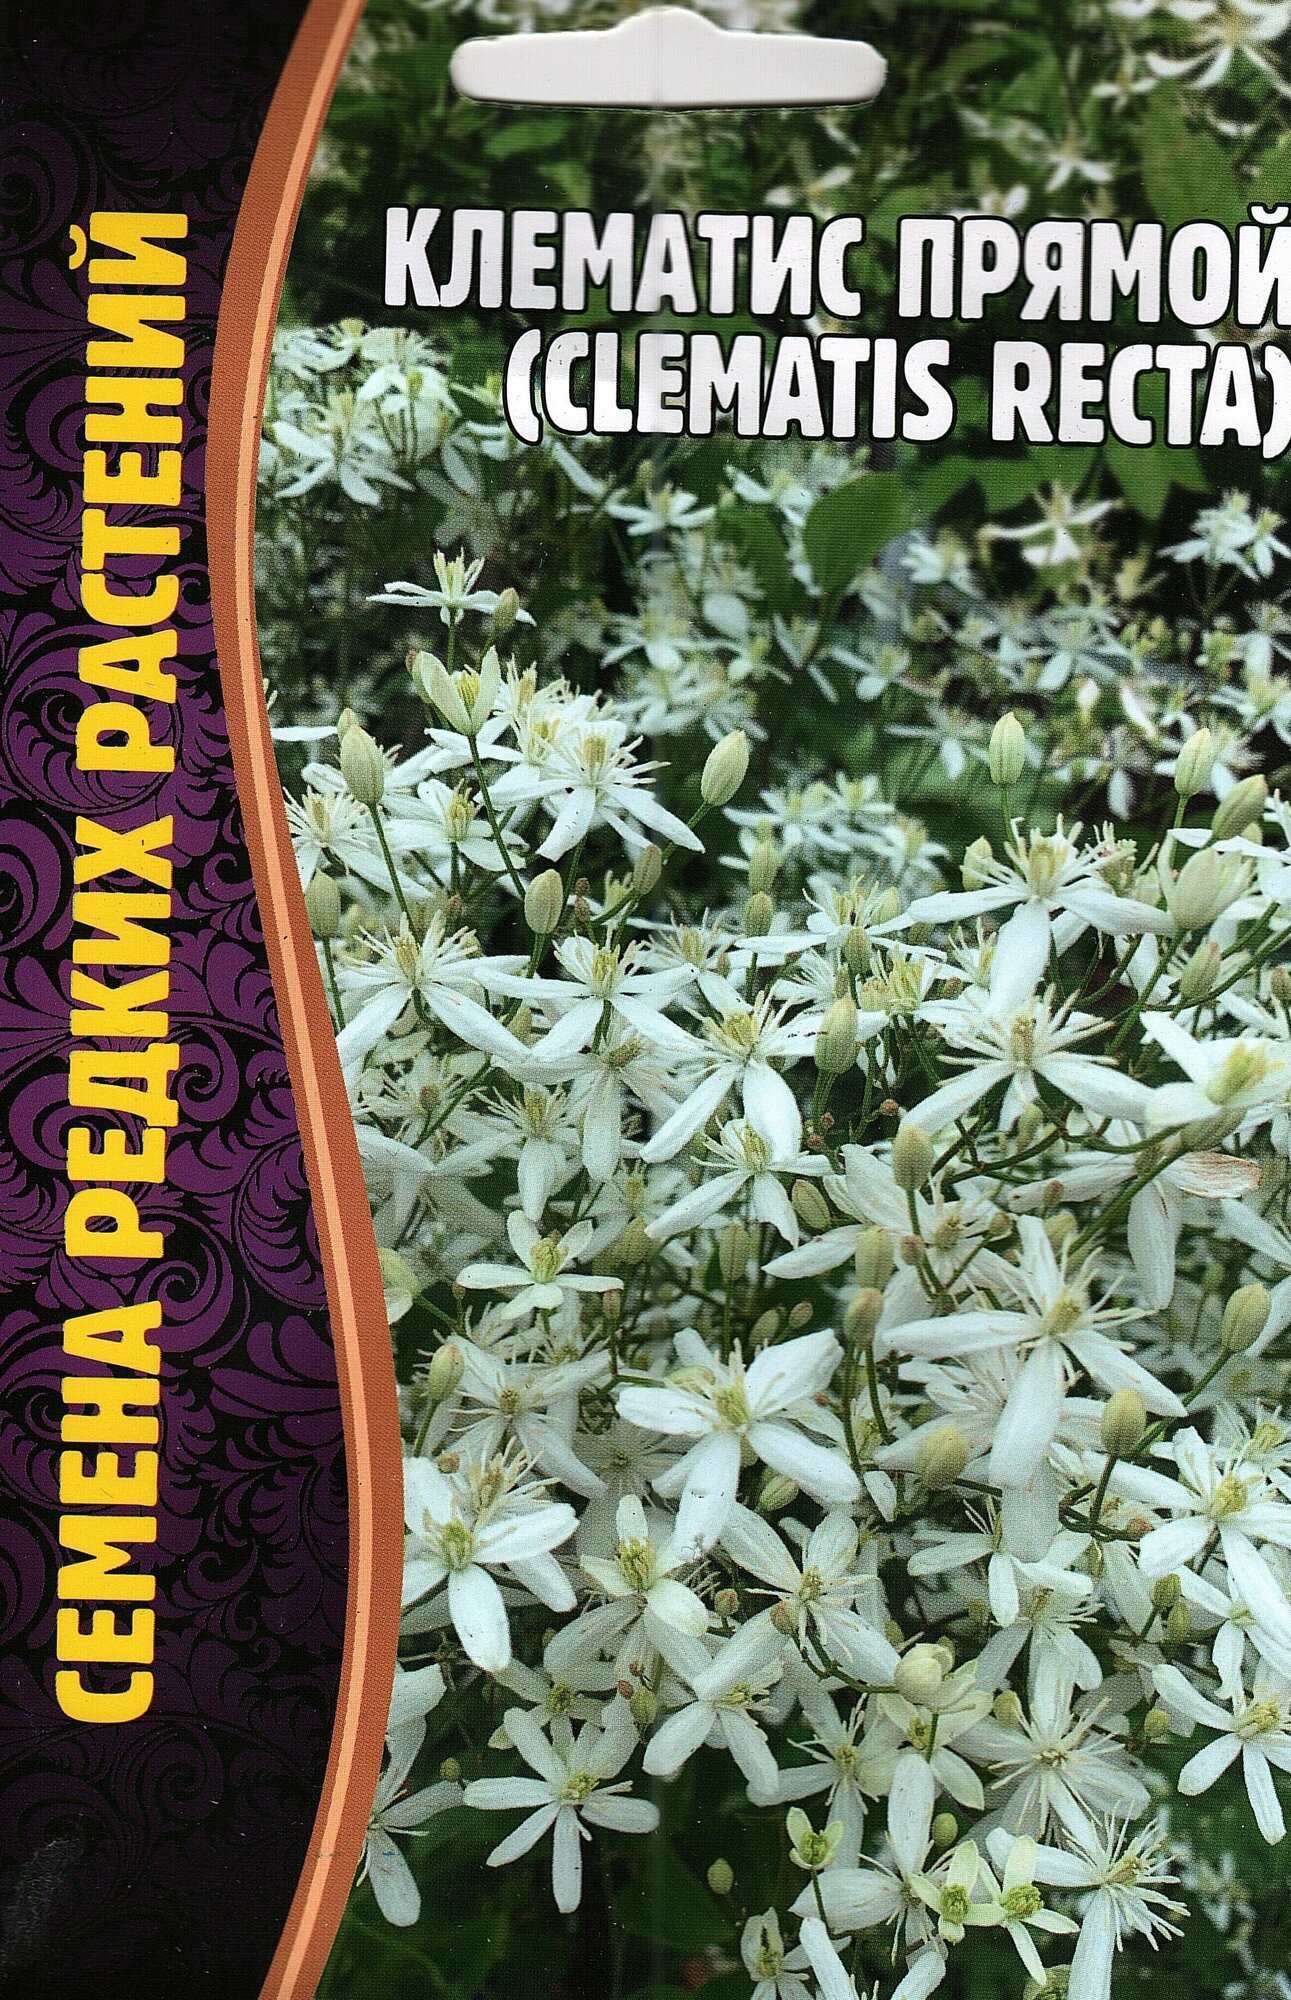 Клематис Прямой Clematis recta семена ( 1 уп: 5 семян )